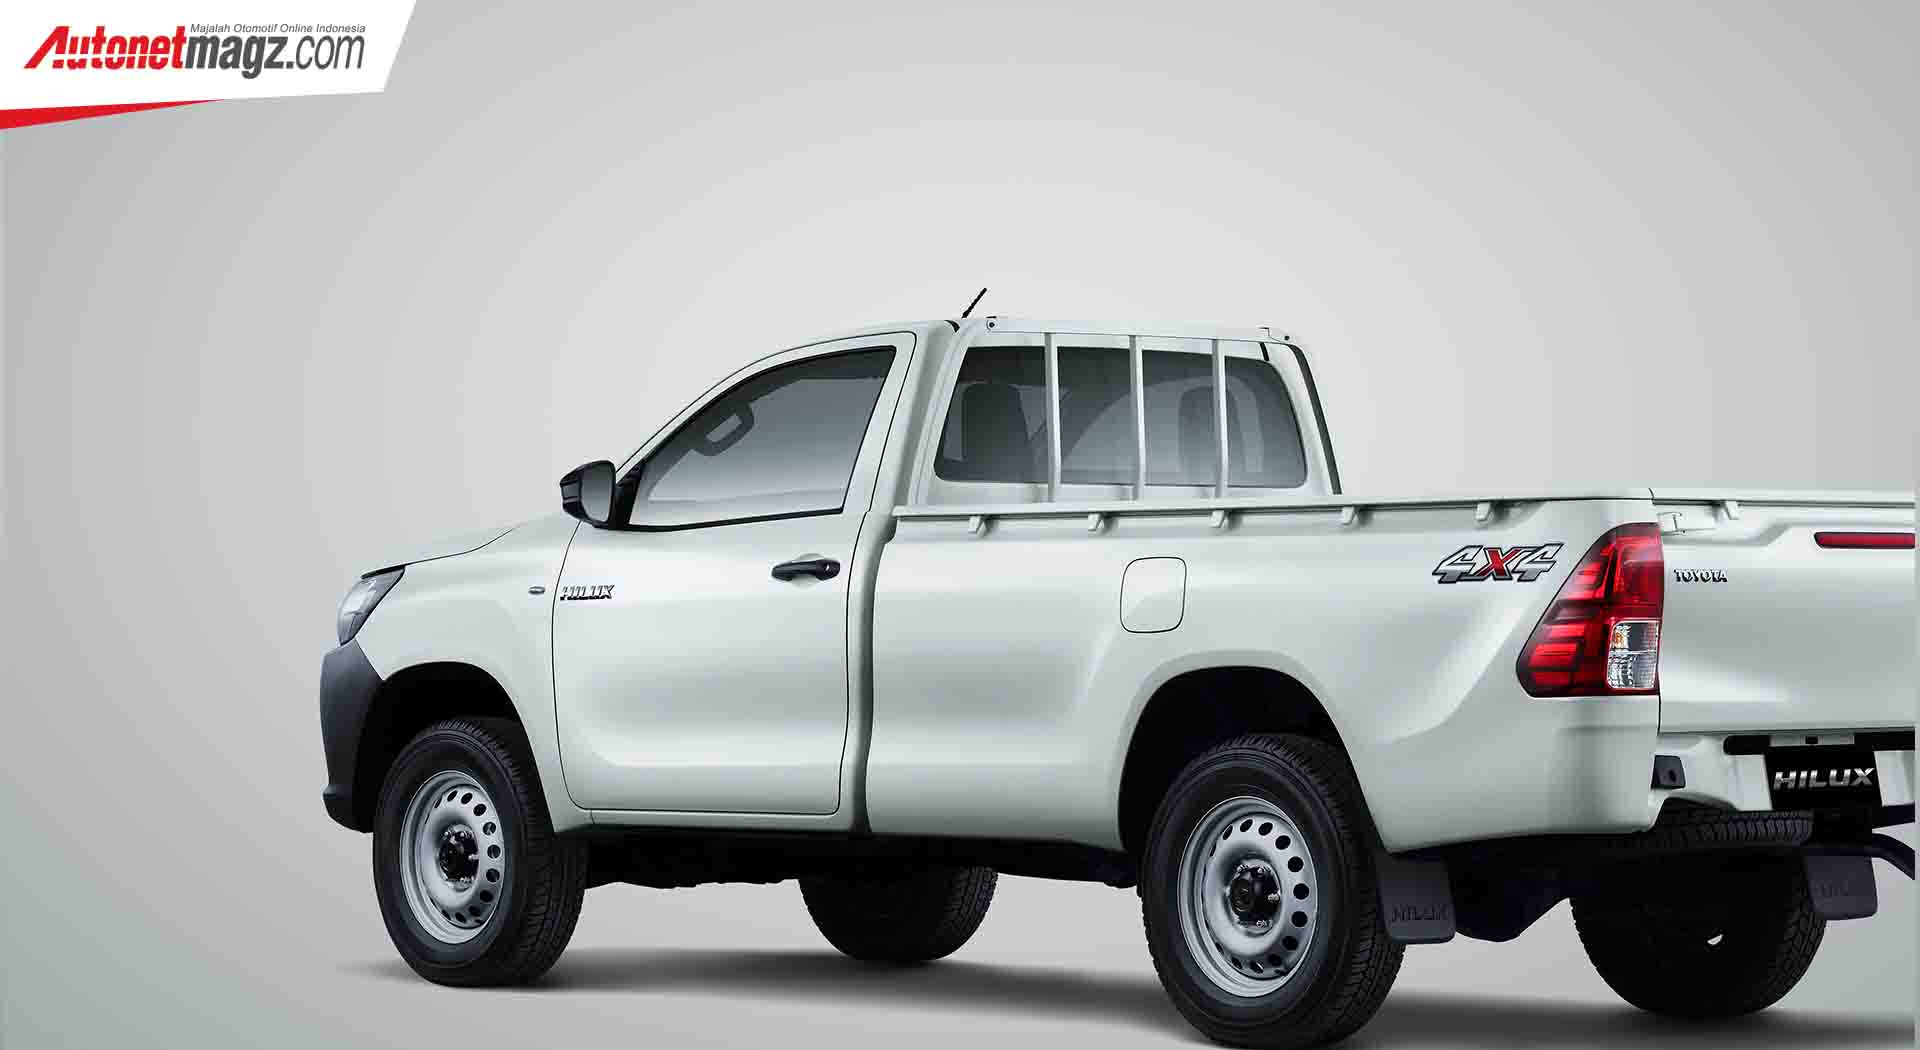 Berita, New Toyota Hiux Single Cabin Diesel: Toyota Rilis Hilux Single Cabin Dengan Mesin Diesel Baru!